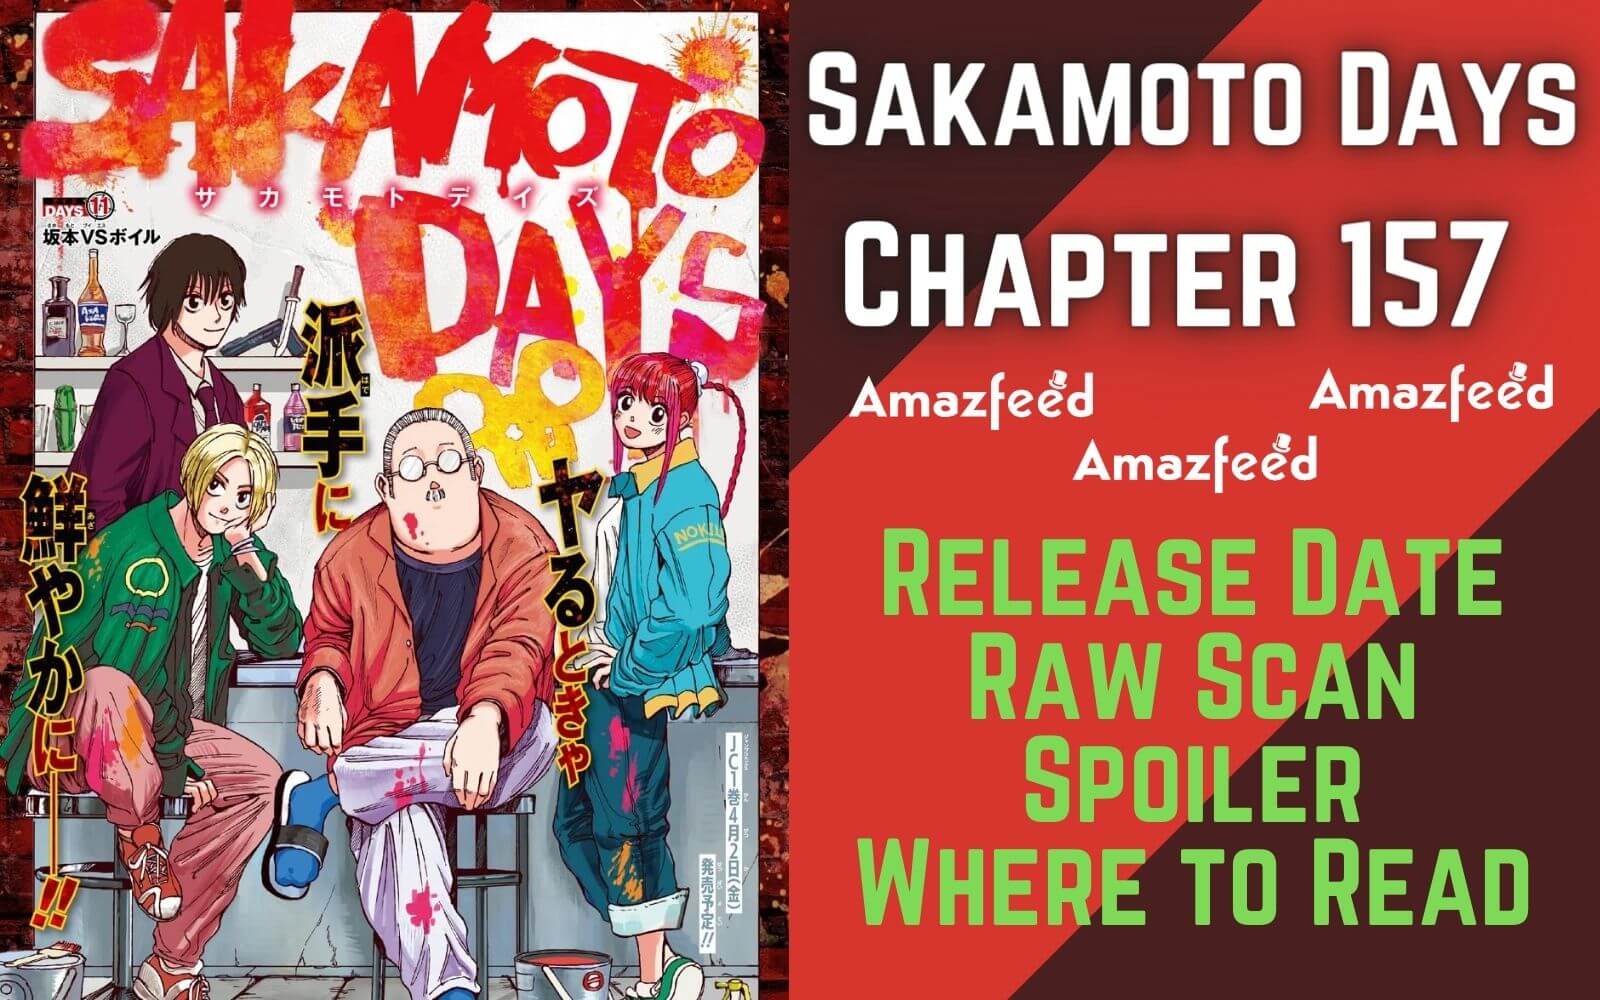 Sakamoto Days Chapter 157 Spoiler, Recap, Raw Scan & Where to Read